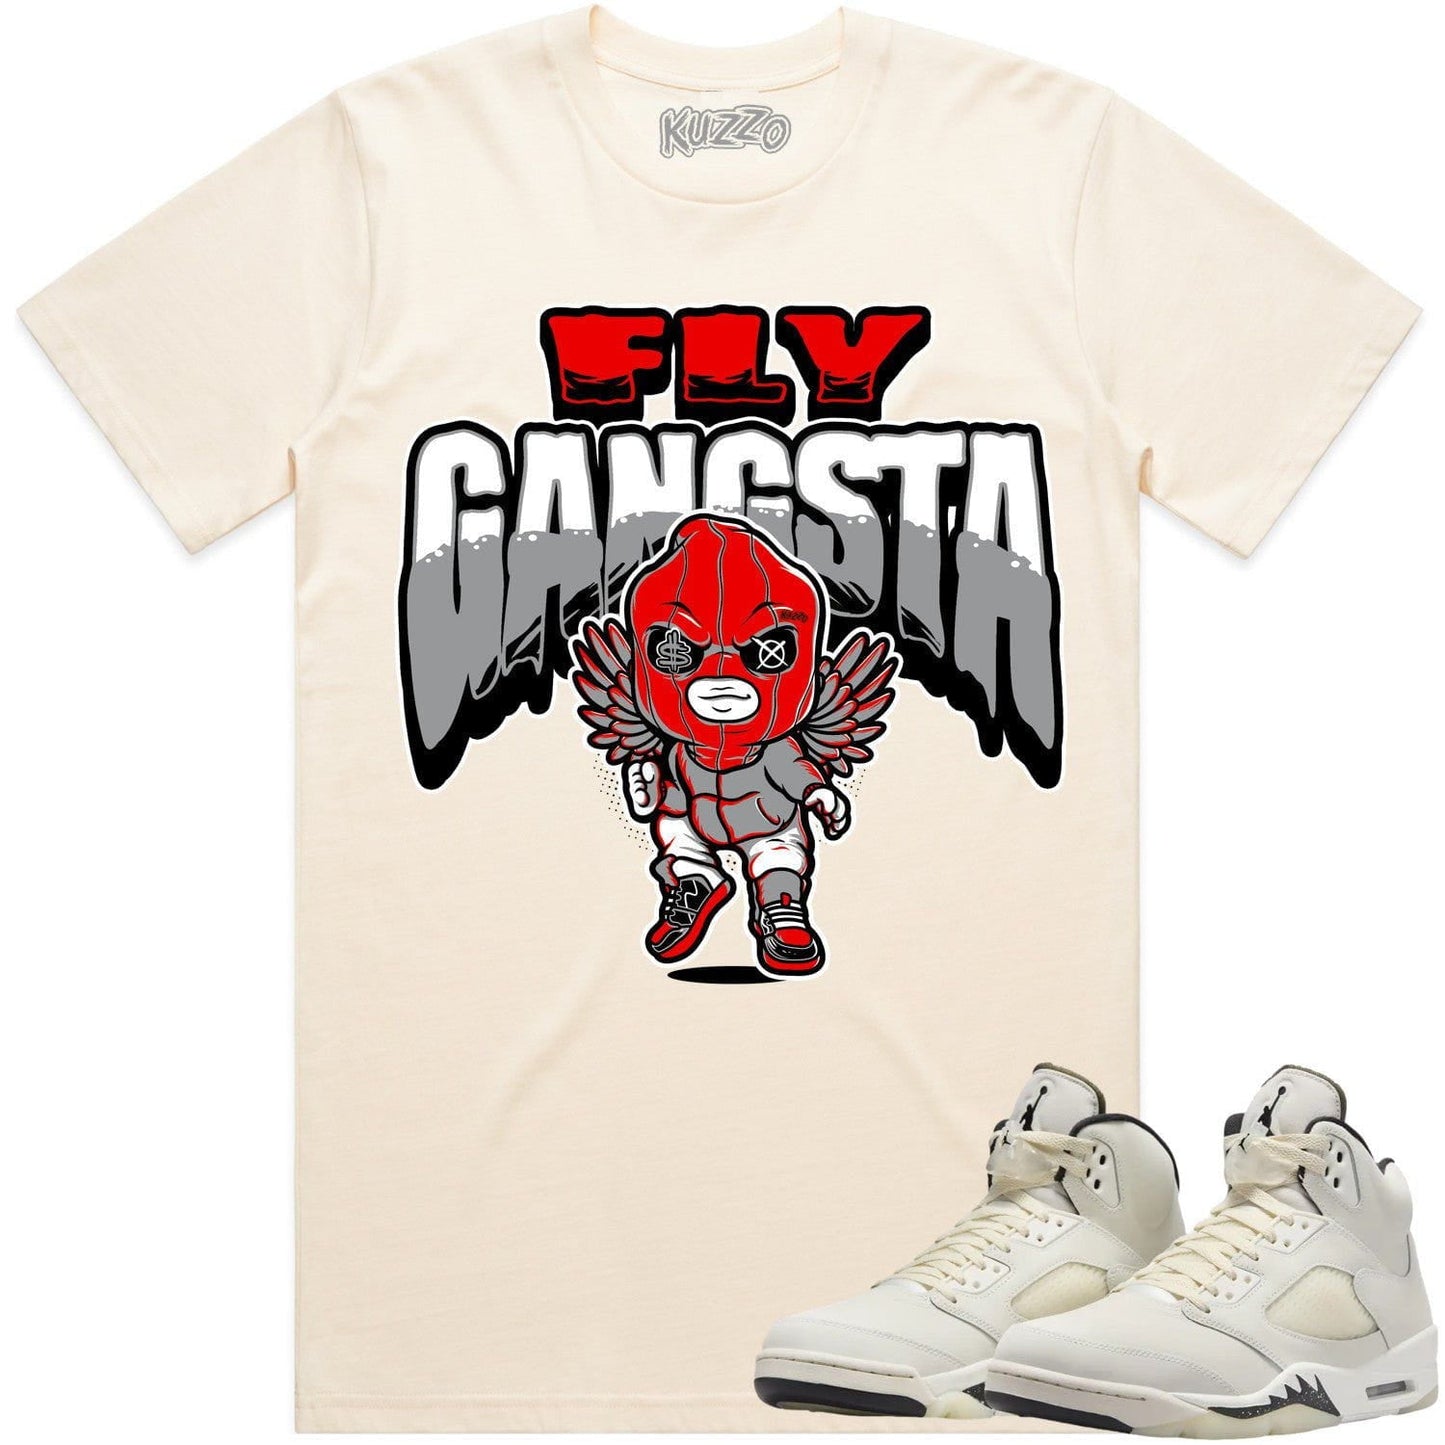 Sail 5s Shirt - Jordan Retro 5 Sail 5s Sneaker Tees - Fly Gangsta